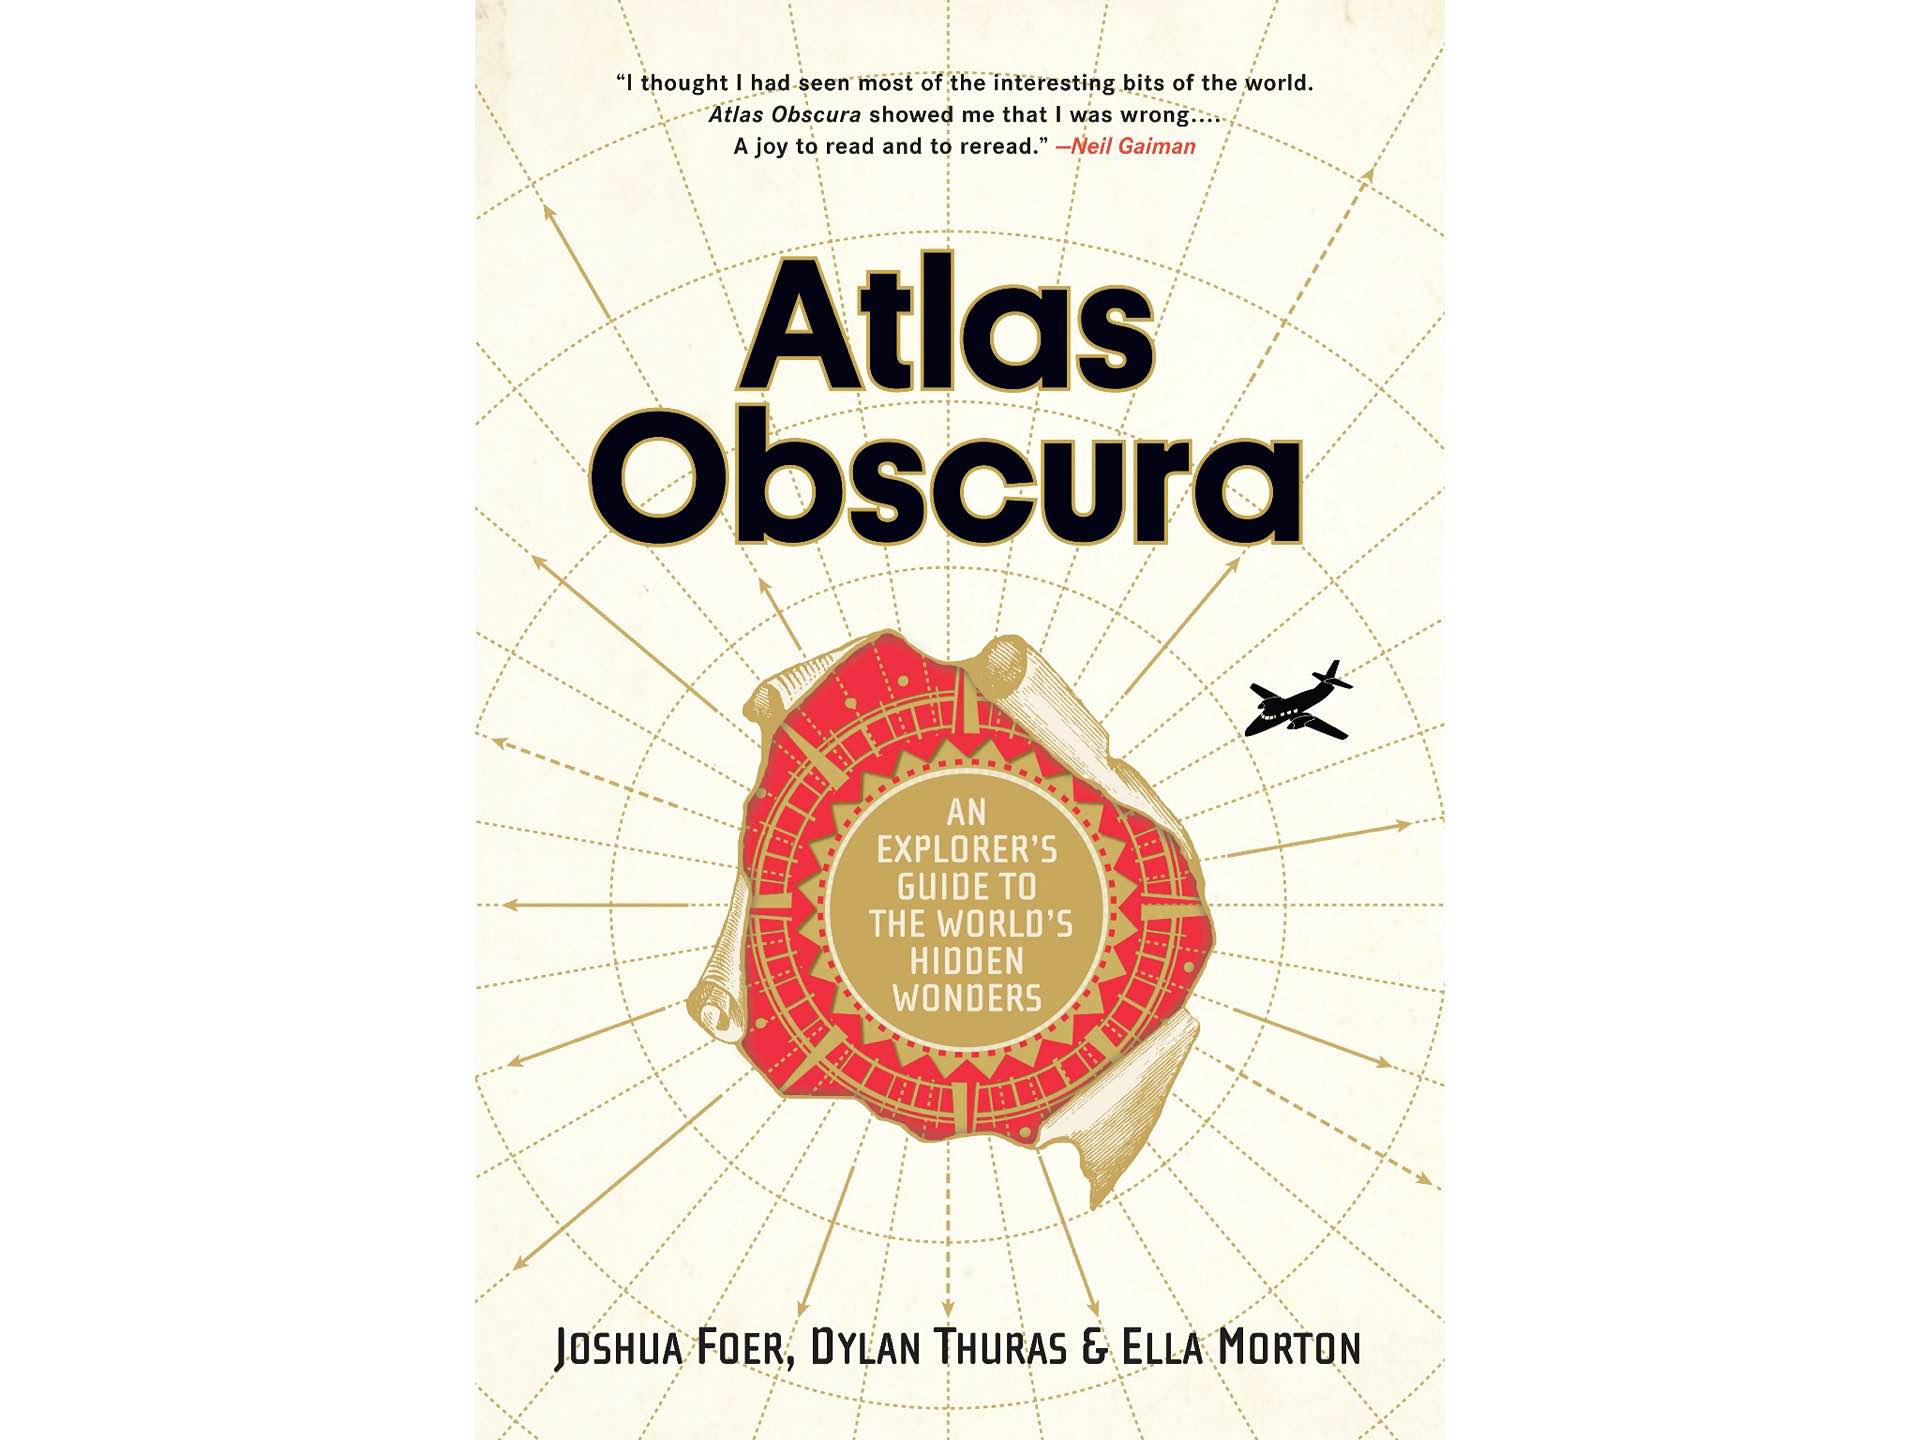 The Atlas Obscura book by Joshua Foer, Dylan Thuras, and Ella Morton.